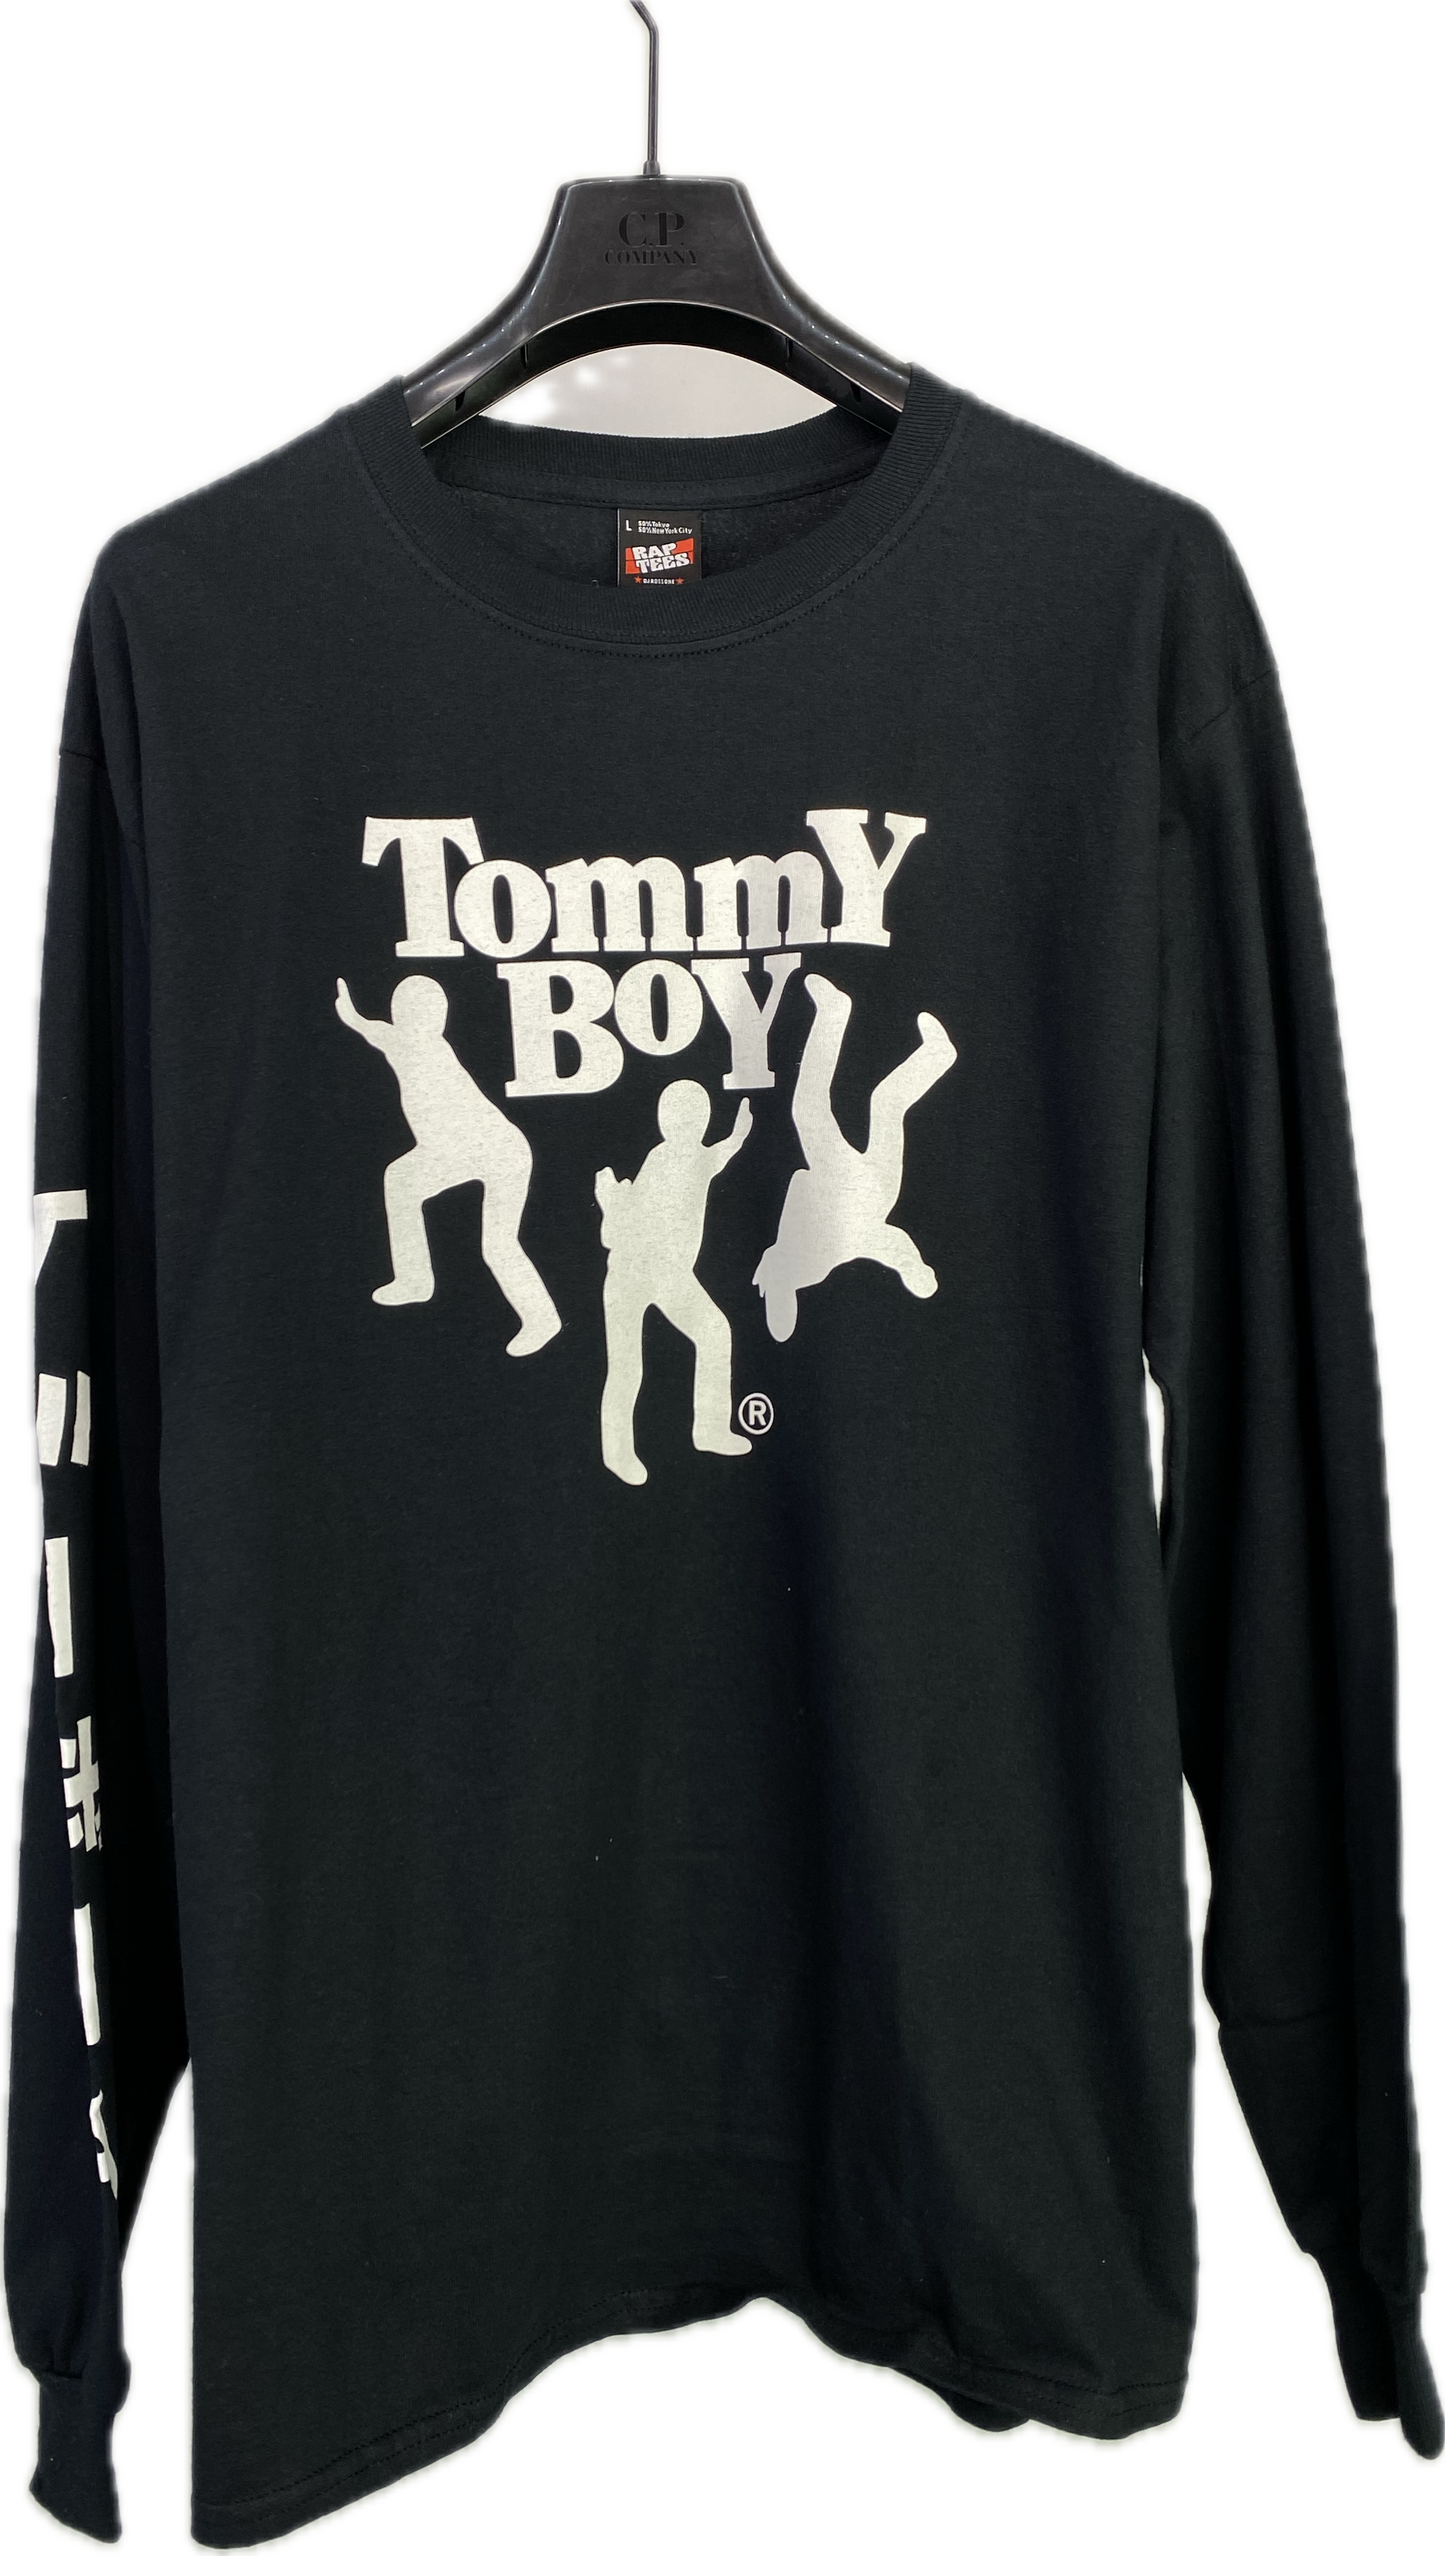 Tommy Boy Longsleeve T-Shirt Large